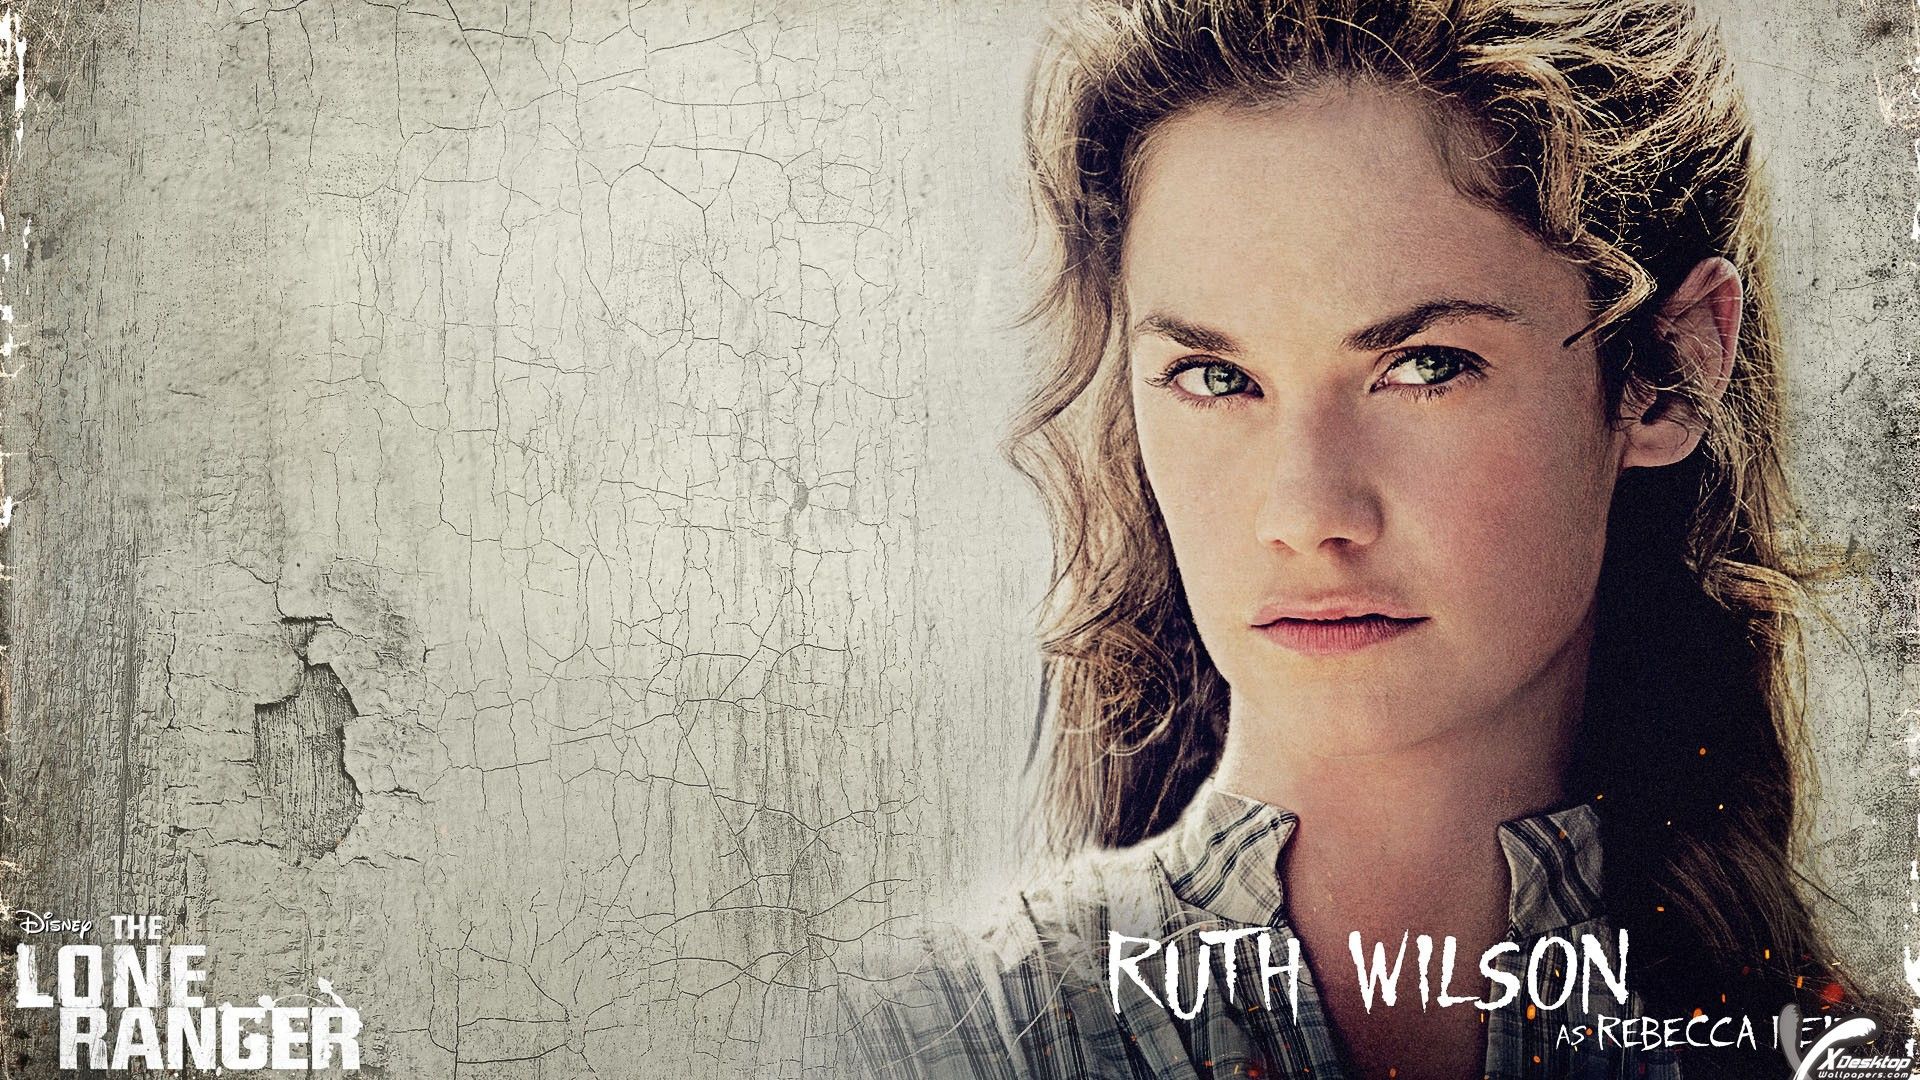 Ruth Wilson Face Closeup In Movie The Lone Ranger Wallpaper